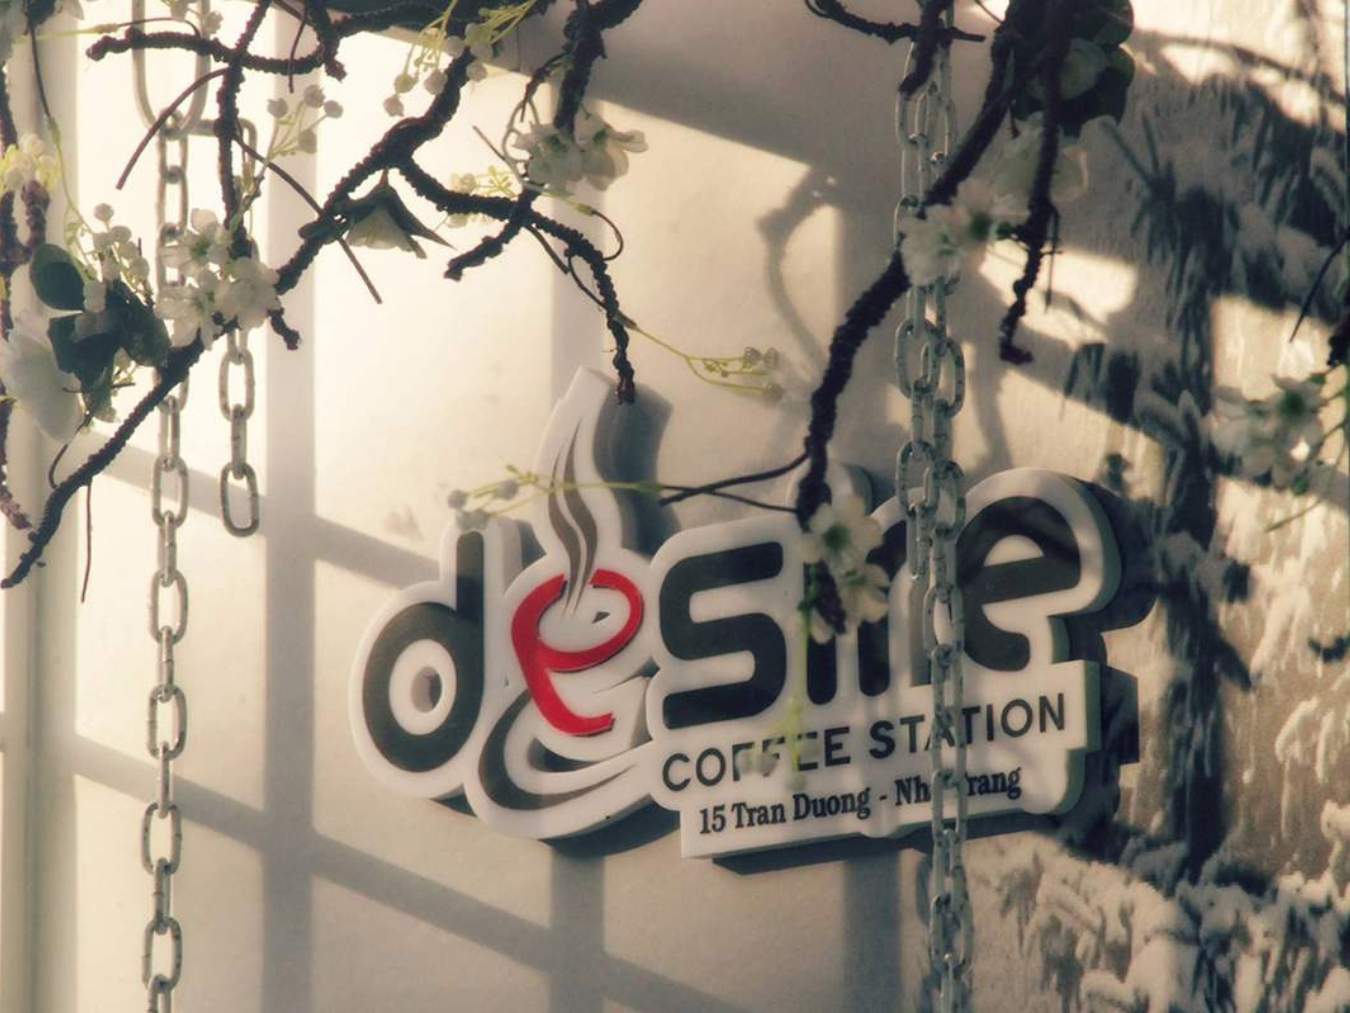 Desire Coffee Station